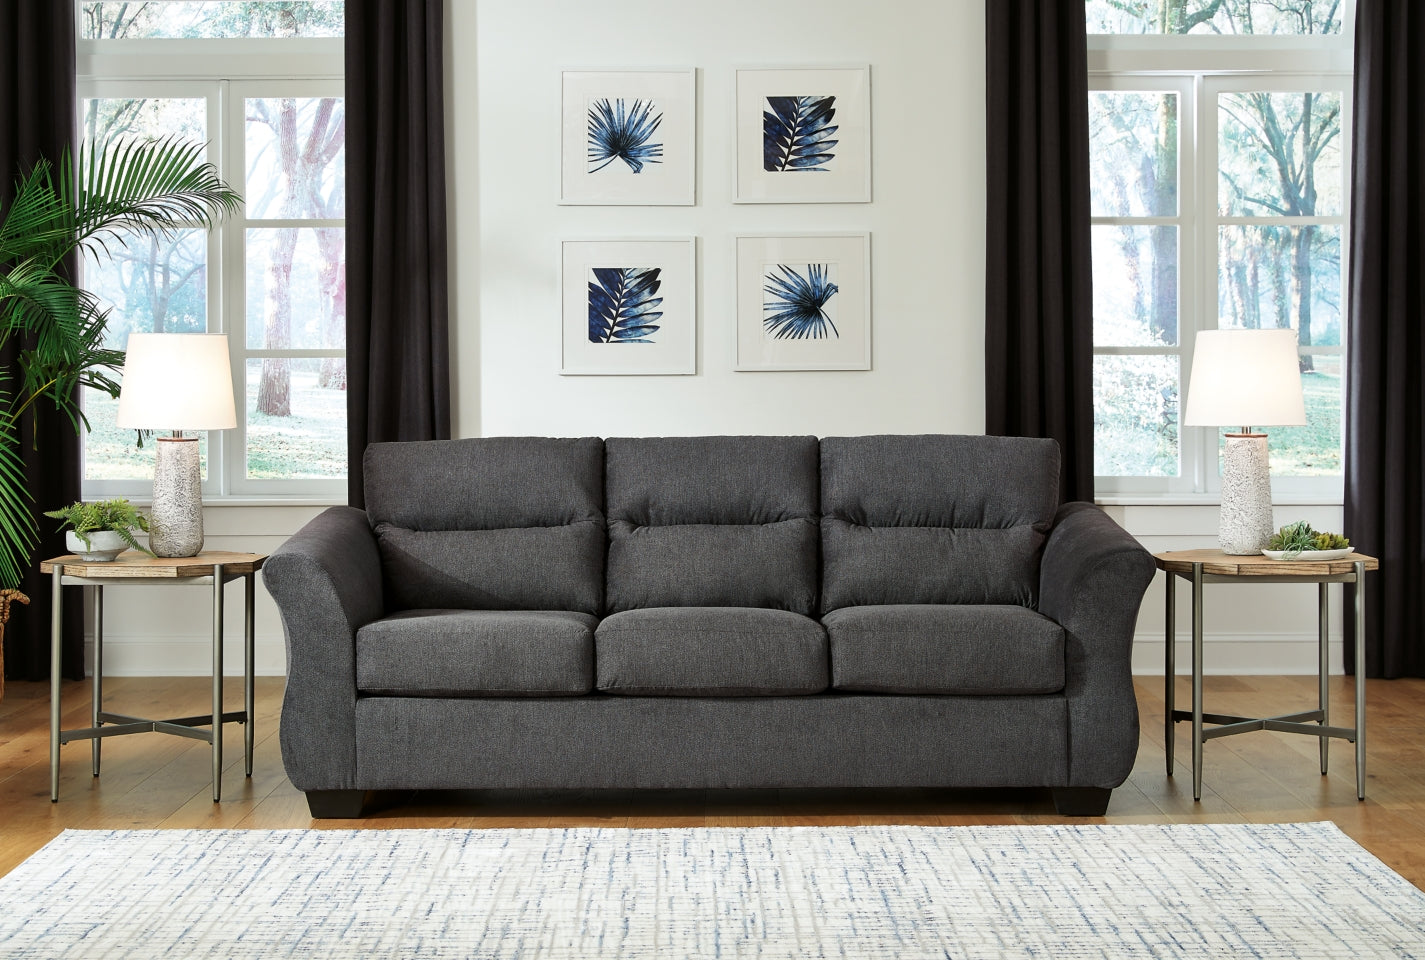 Miravel Queen Sofa Sleeper - furniture place usa